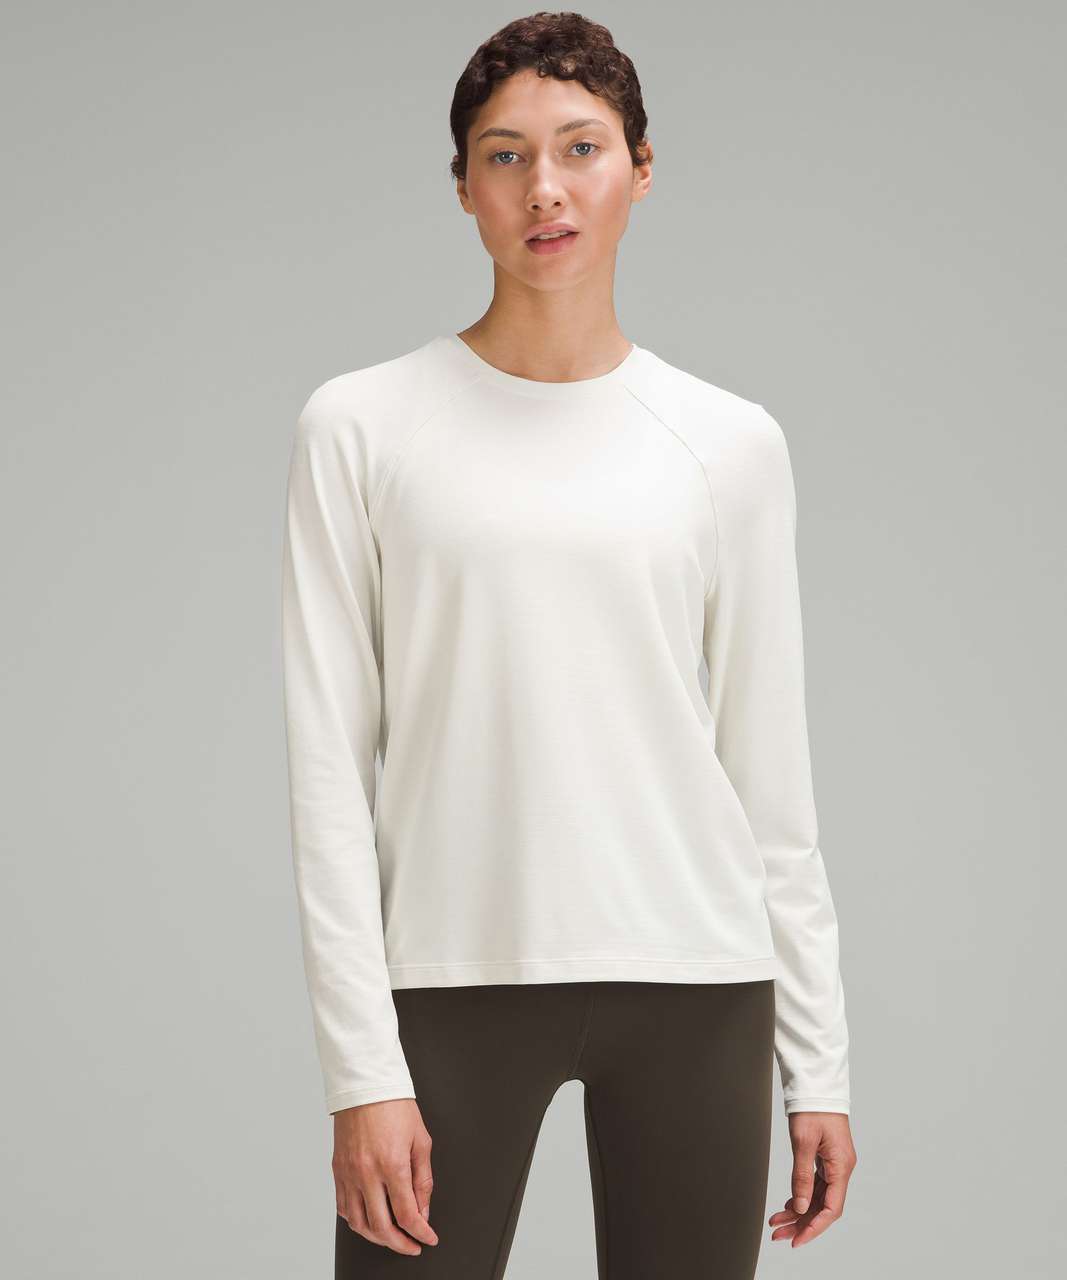 Lululemon License to Train Classic-Fit Long-Sleeve Shirt - Heathered Bone